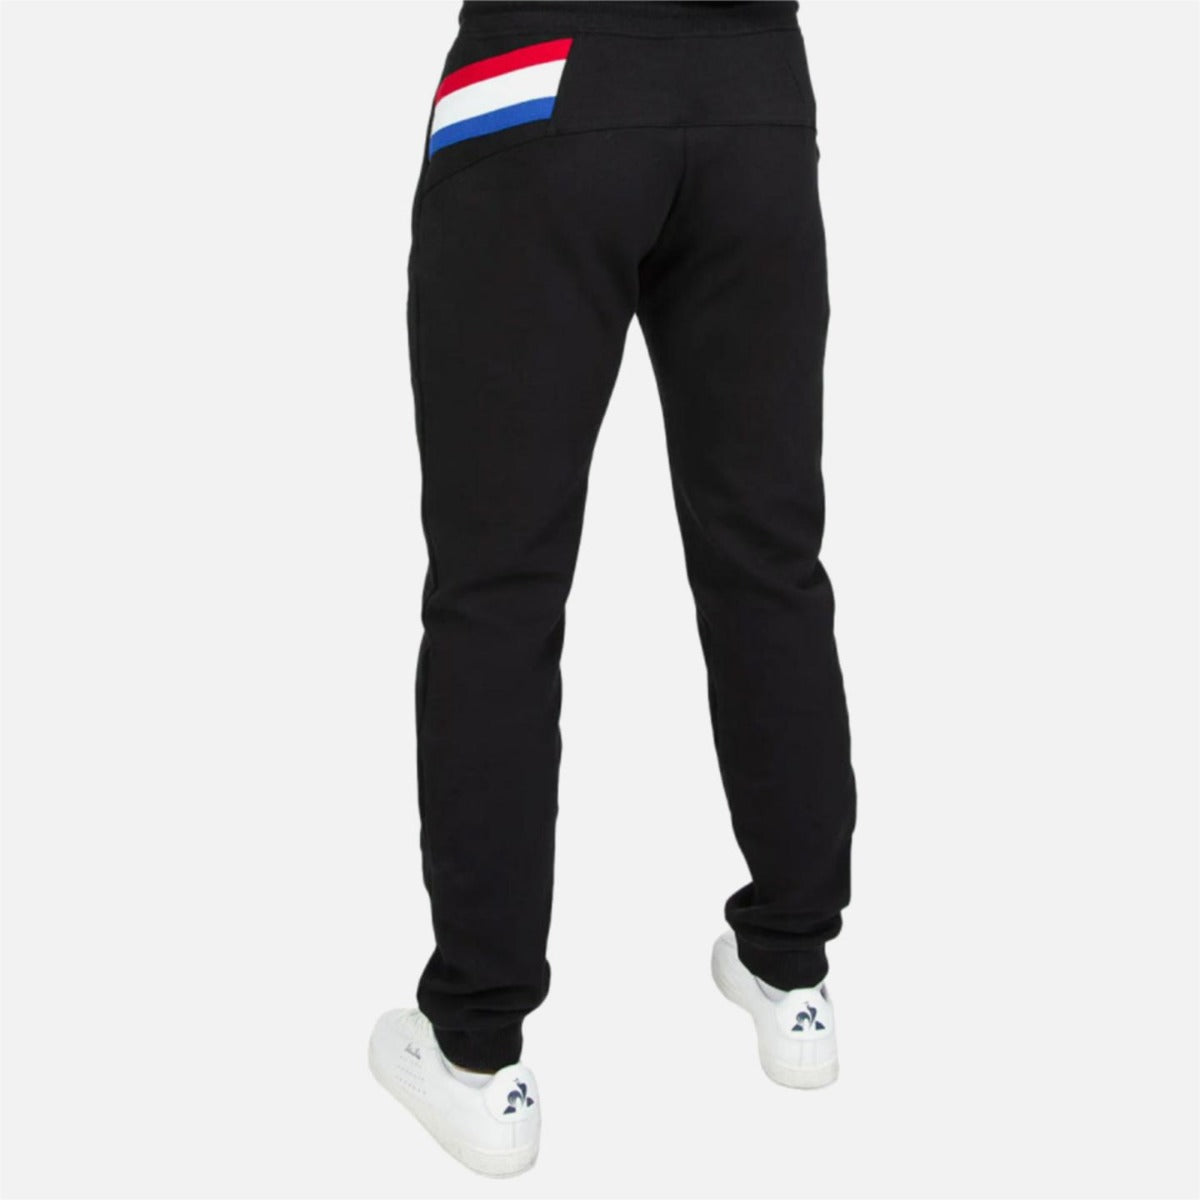 Pantalon Le Coq Sportif Tricolore - Noir